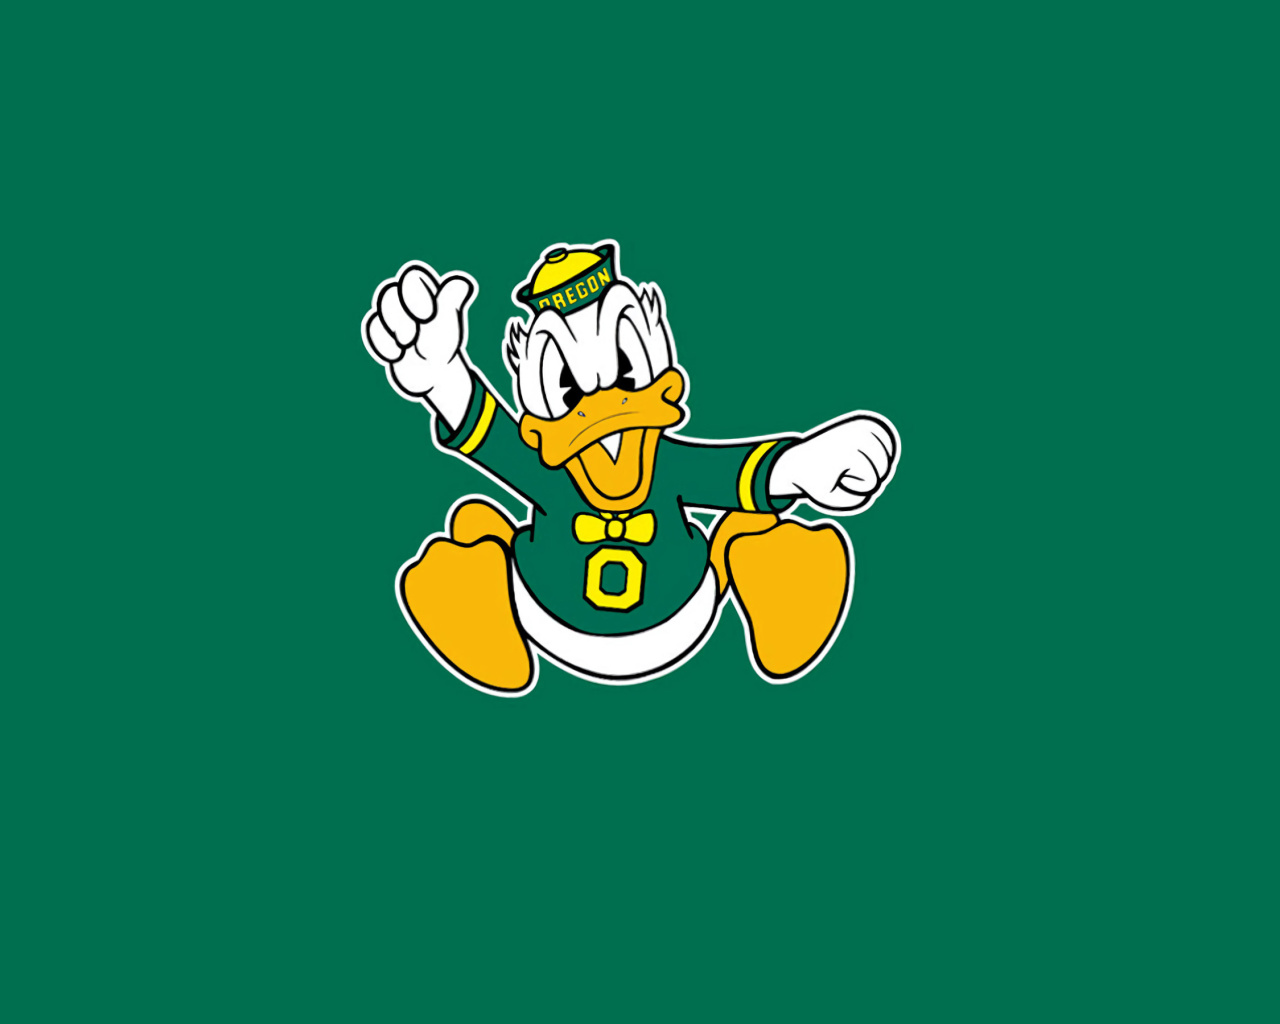 Oregon Ducks University Football Team wallpaper 1280x1024